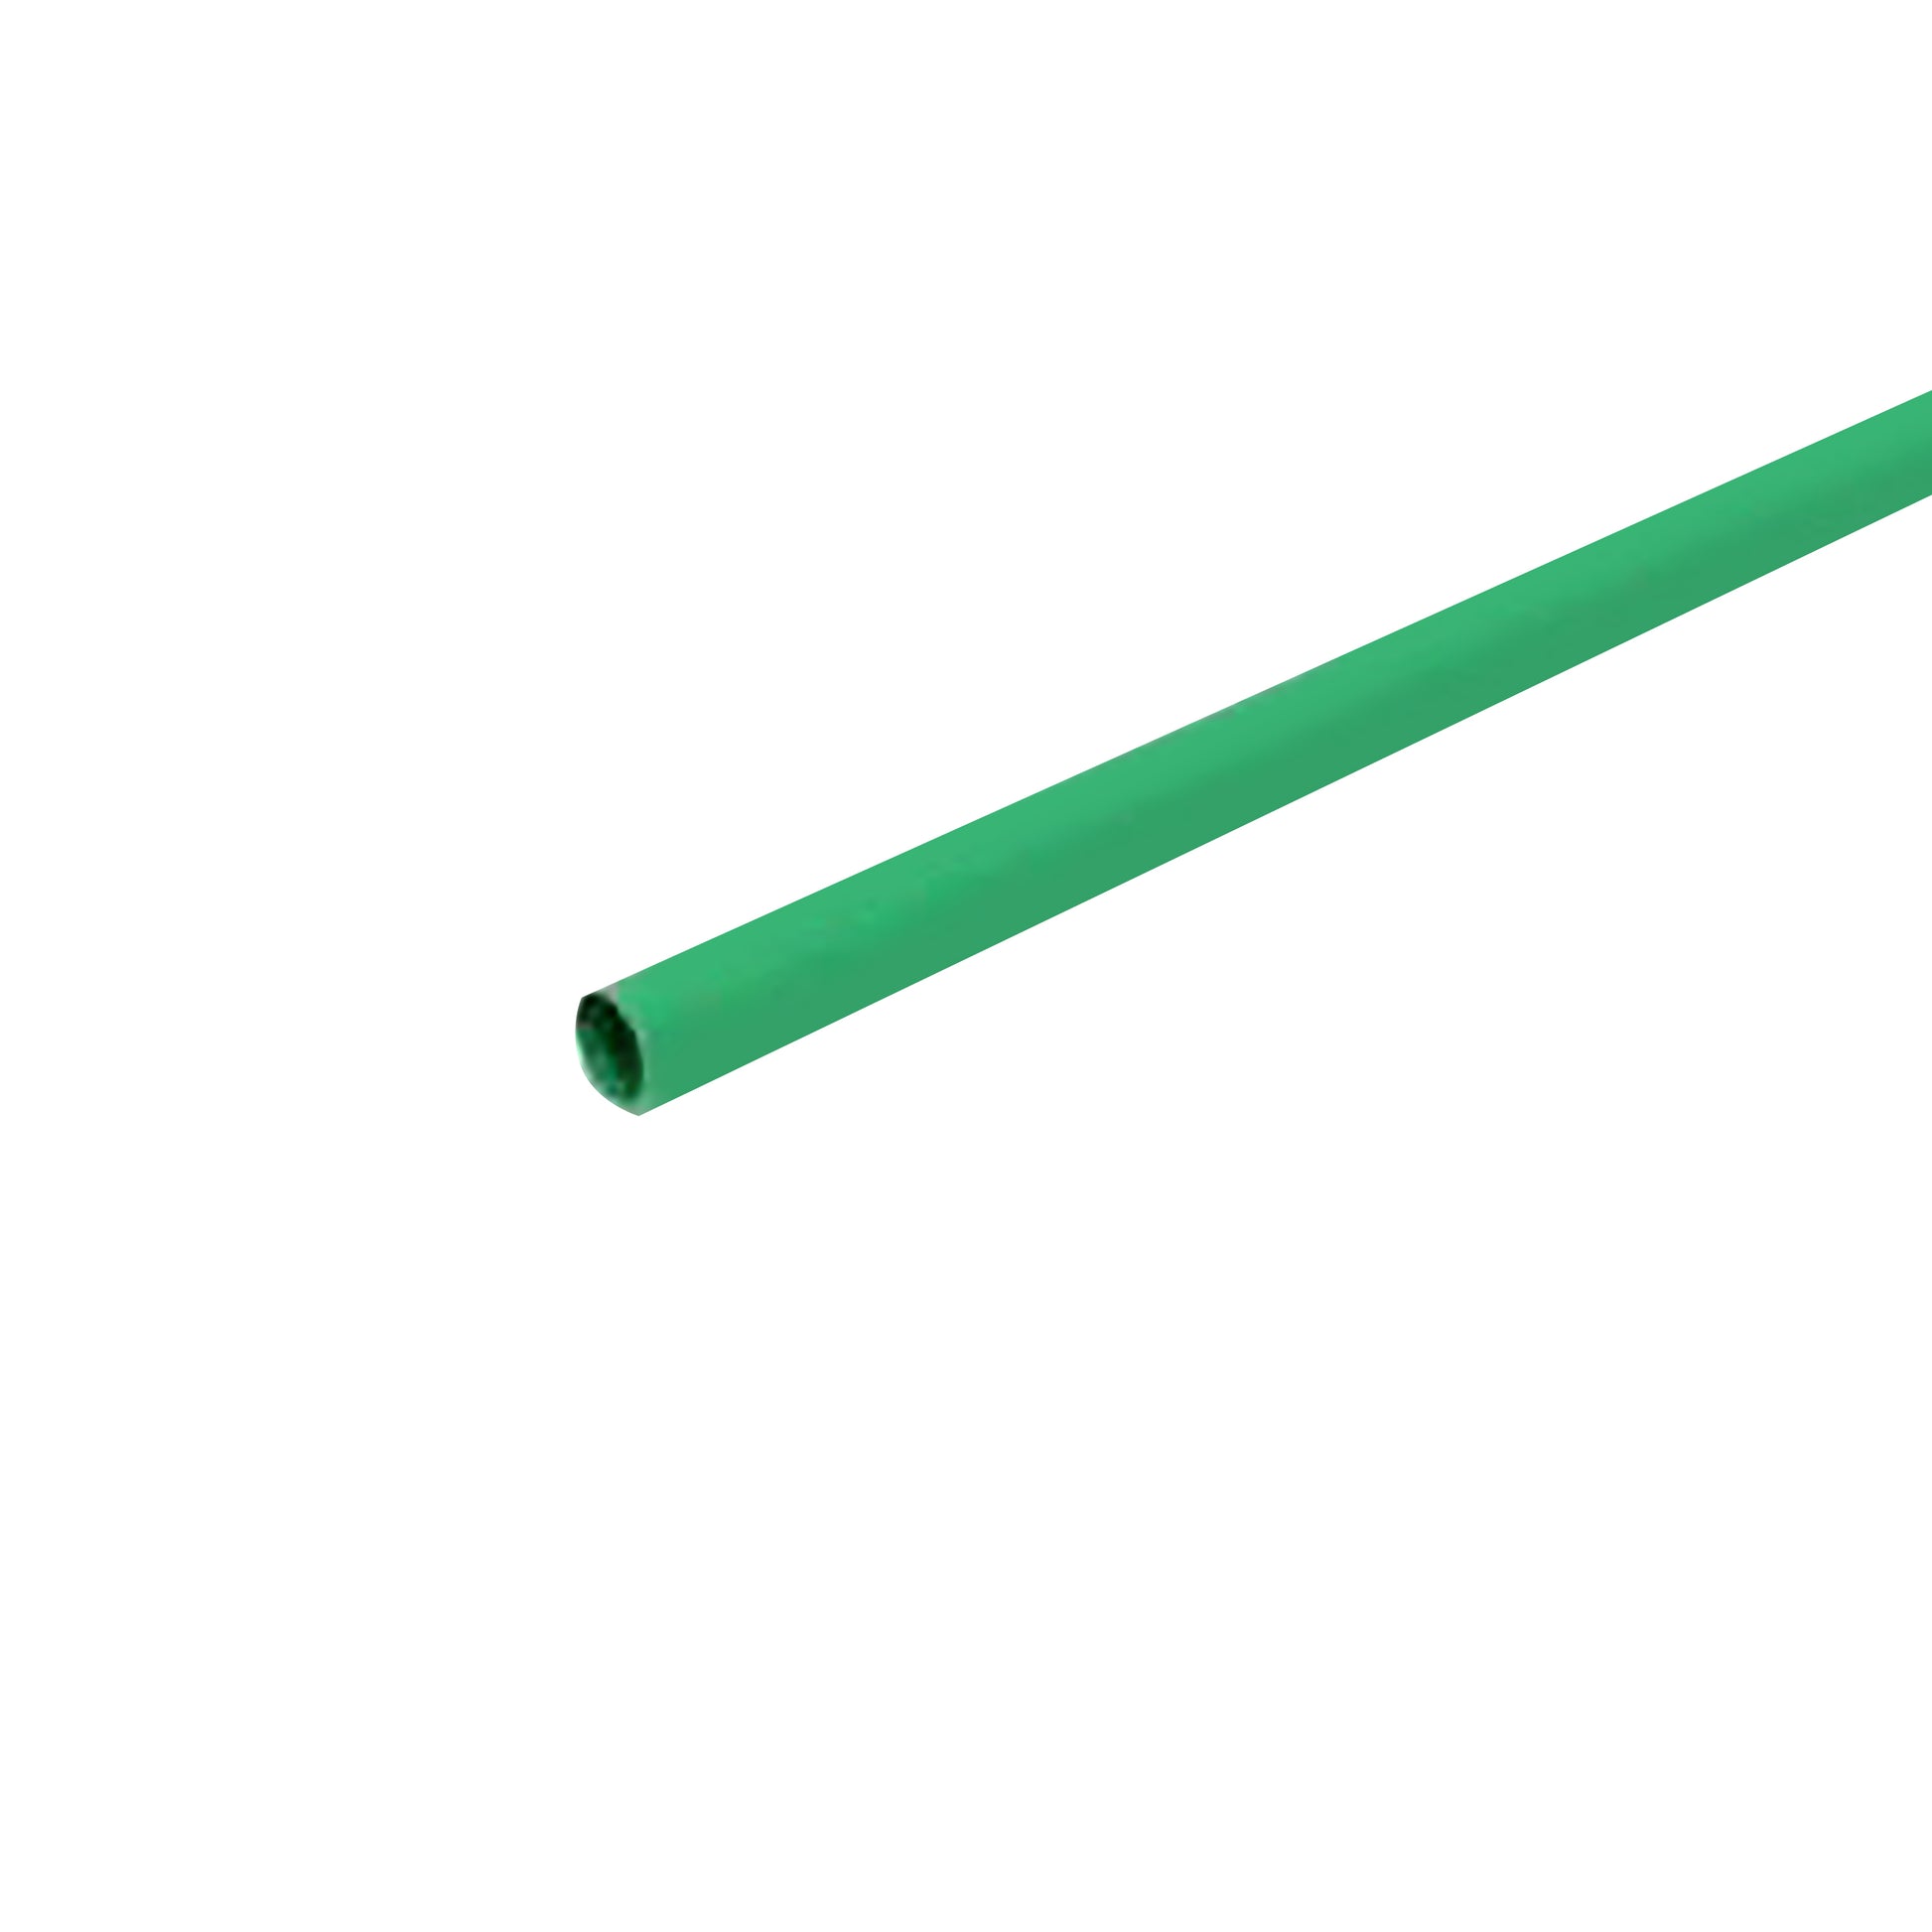 Flexible Thin Single Wall Non-Adhesive Heat Shrink Tubing 2:1 Green 1/4" ID - 12" Inch 10 Pack